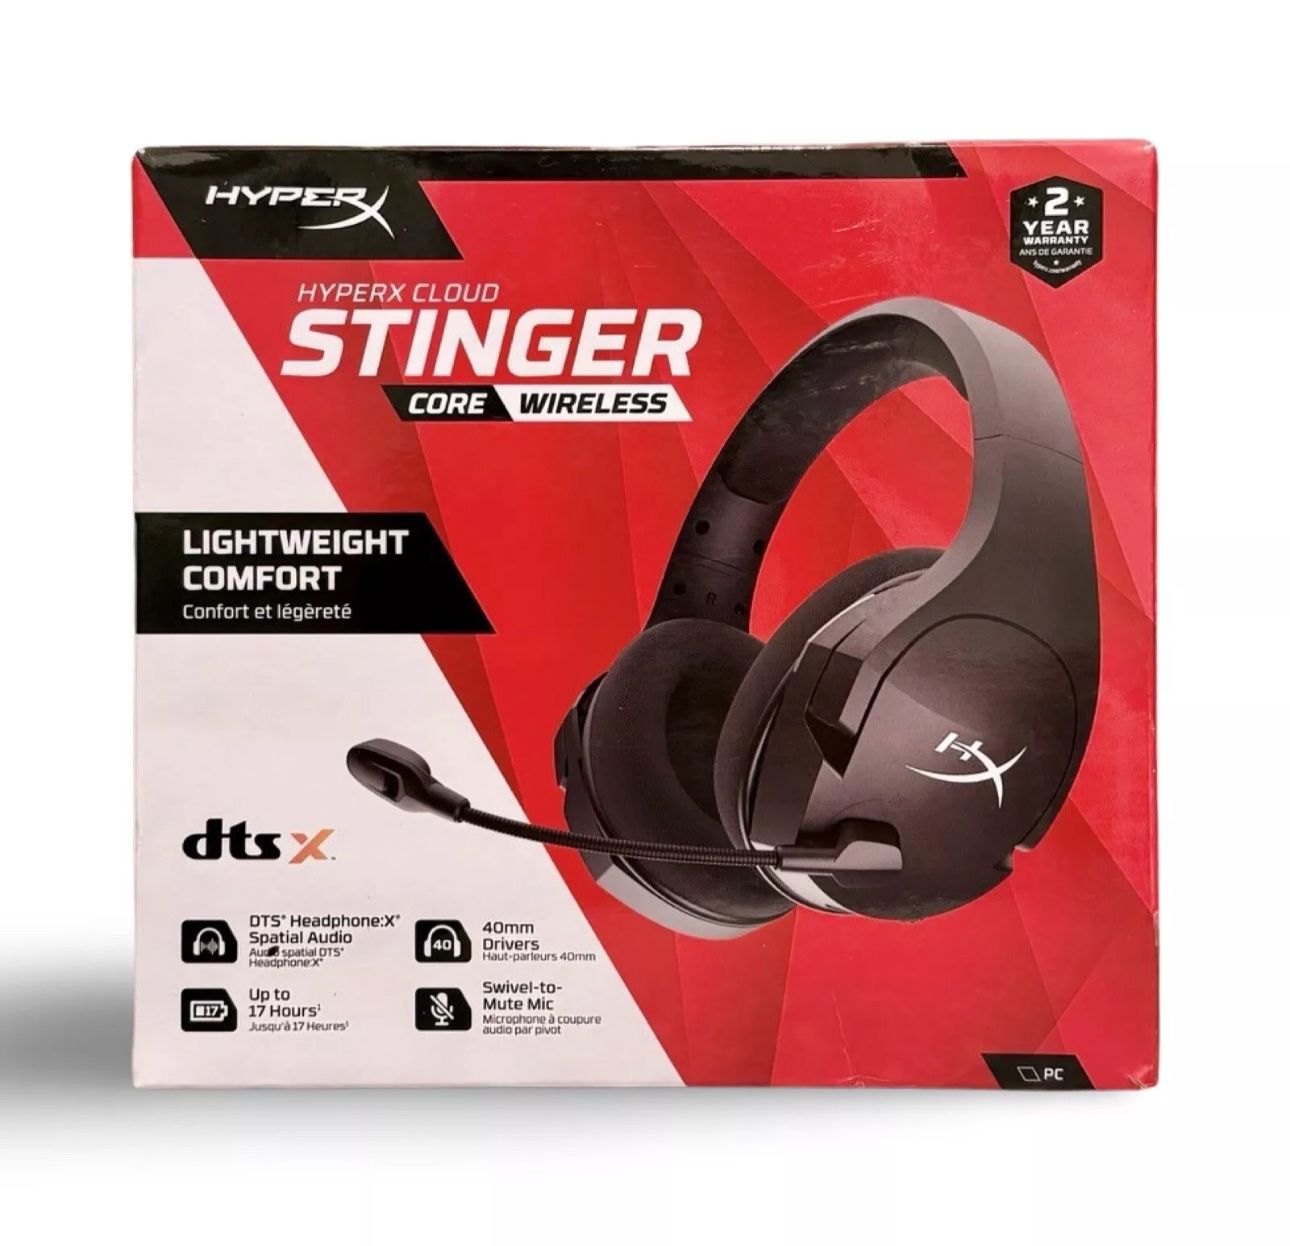 HyperX Cloud Stinger Core – Wireless Lightweight Gaming Headset, DTS Headphone:X